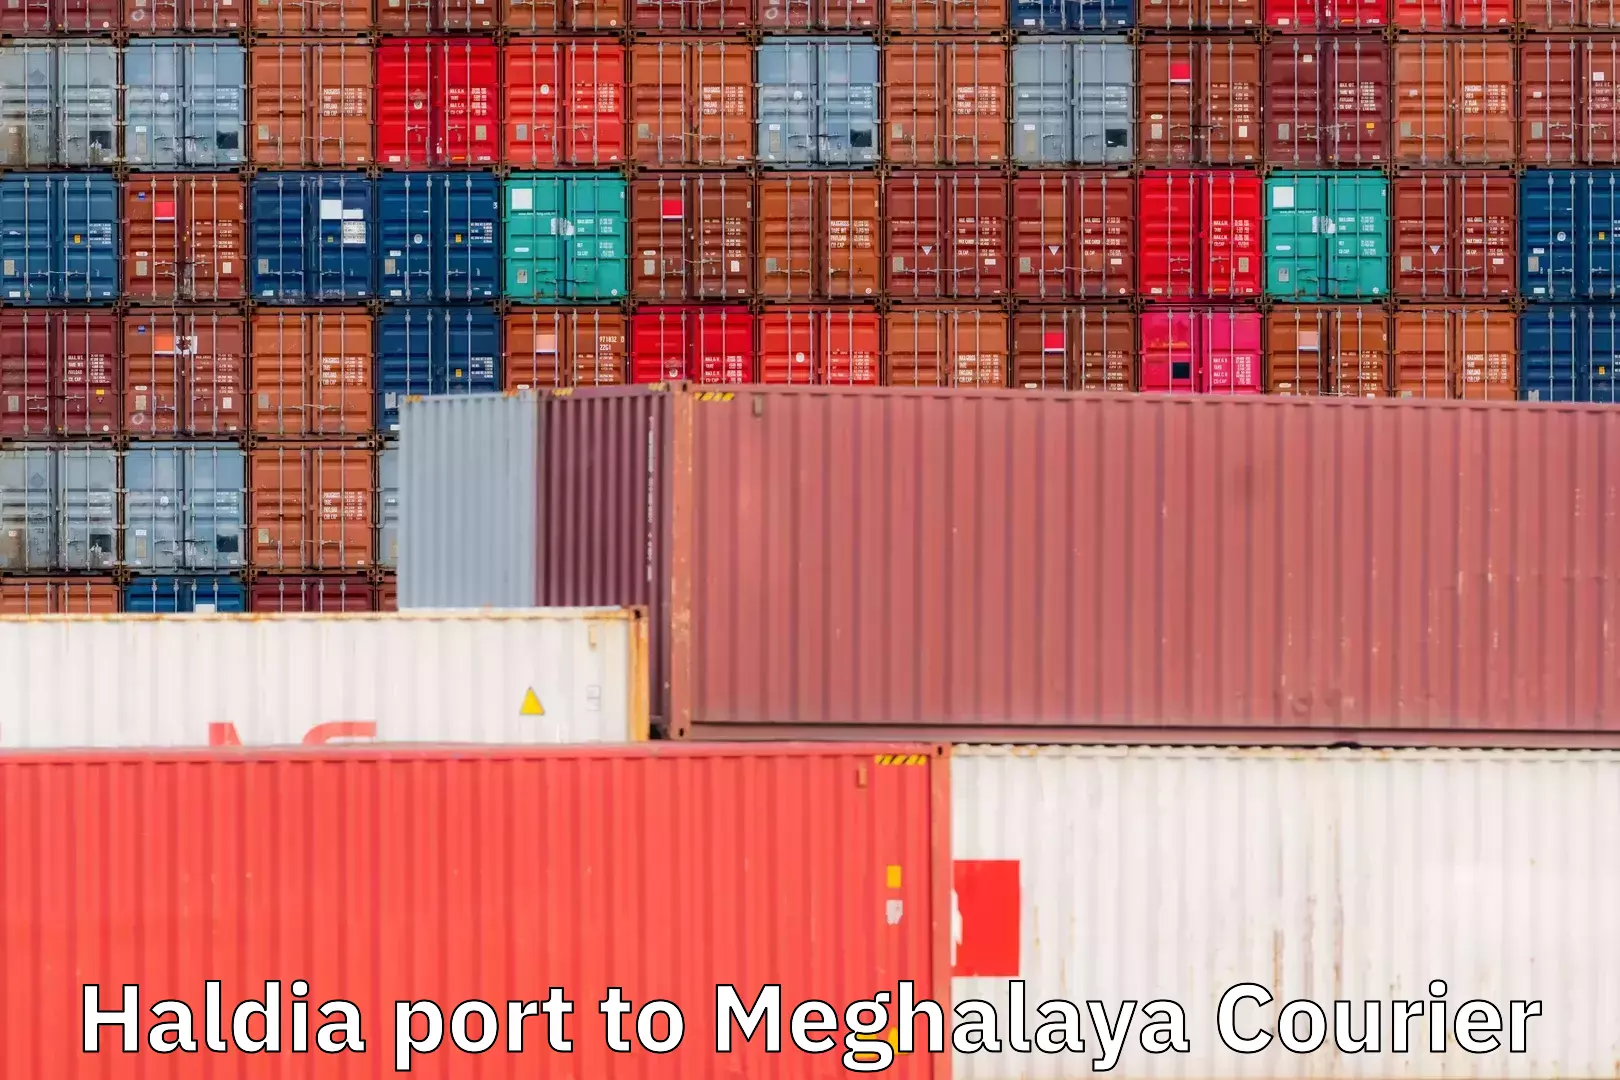 Express delivery capabilities Haldia port to Meghalaya